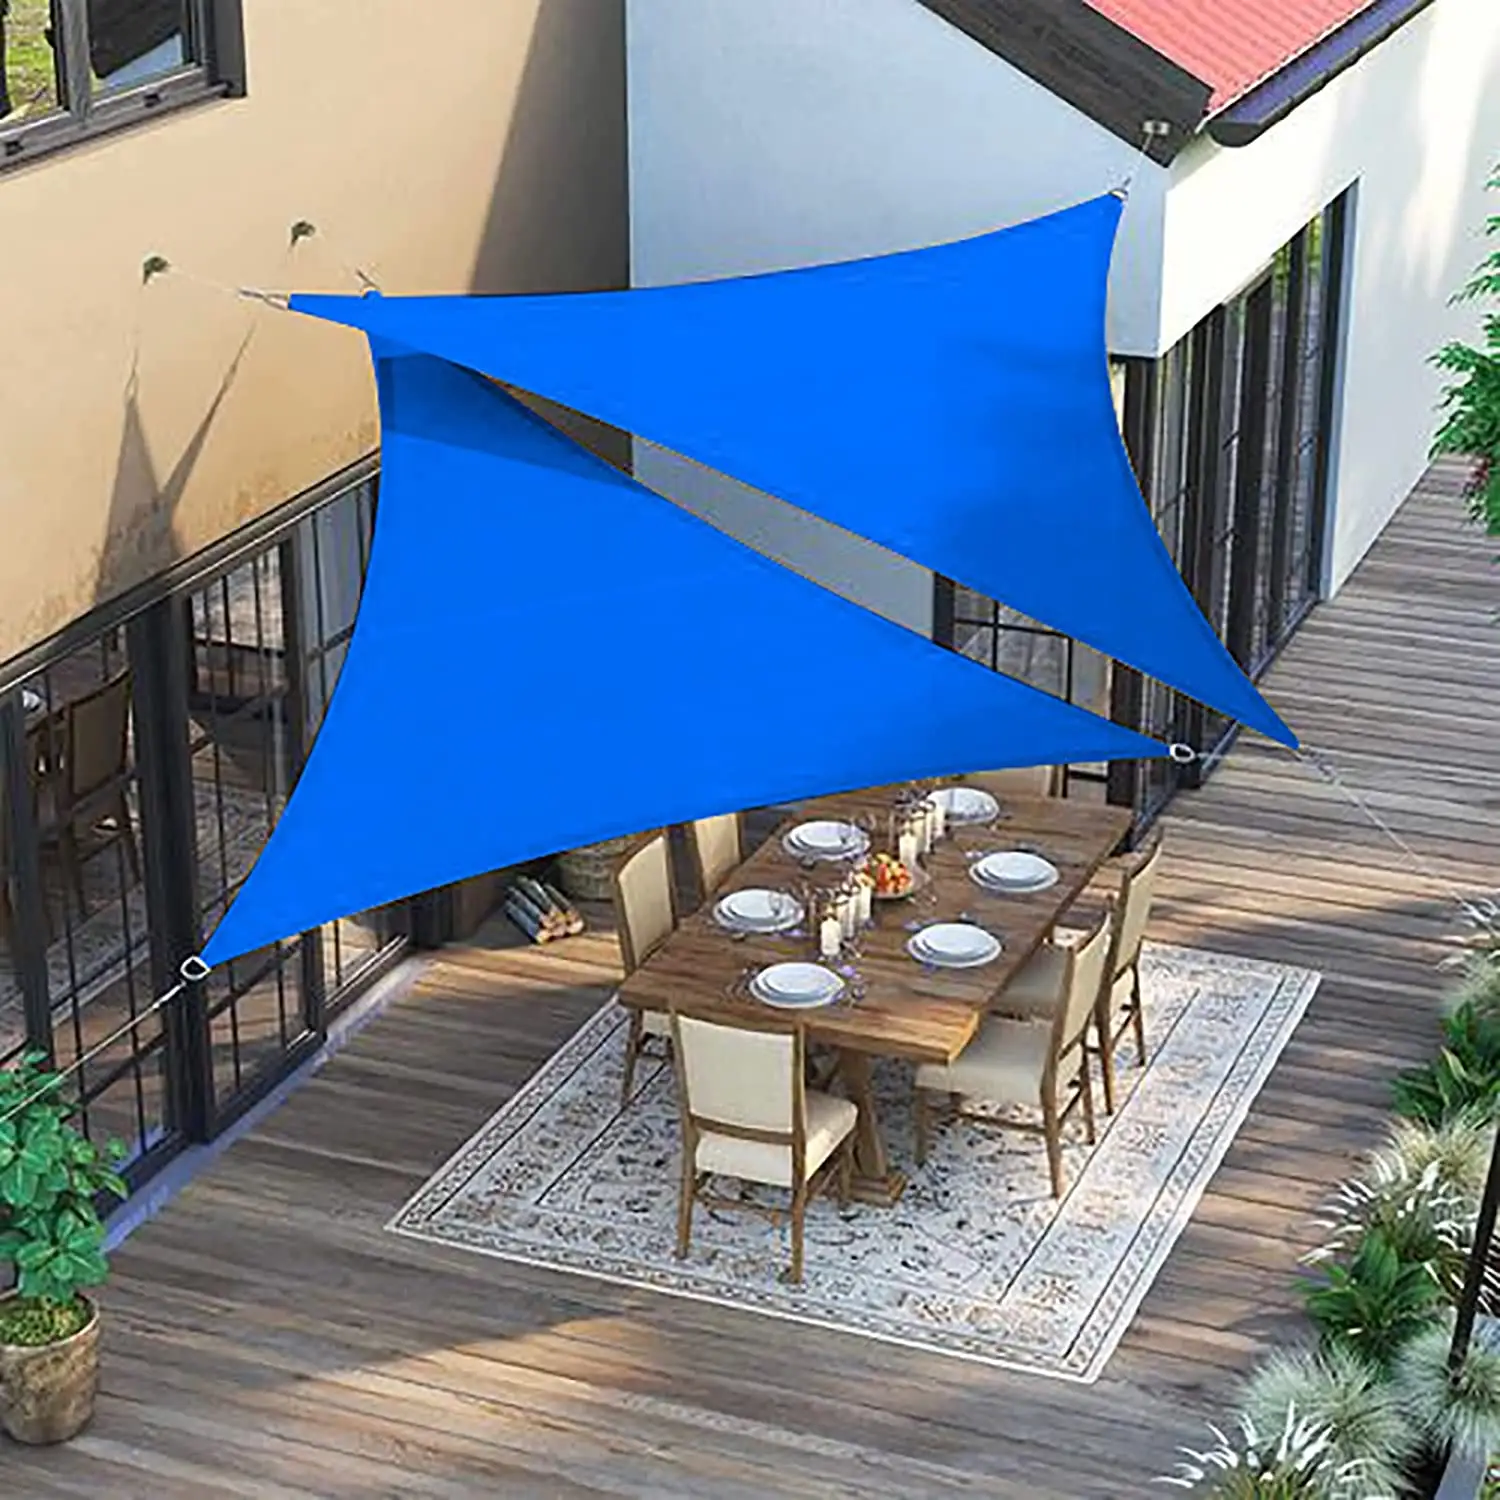 Vela triangular parasol, 9 '10 ''x 9' 10'' x 9 '10 ''Azul parasoles velas Patio cubierta dosel parasoles para actividades al aire libre